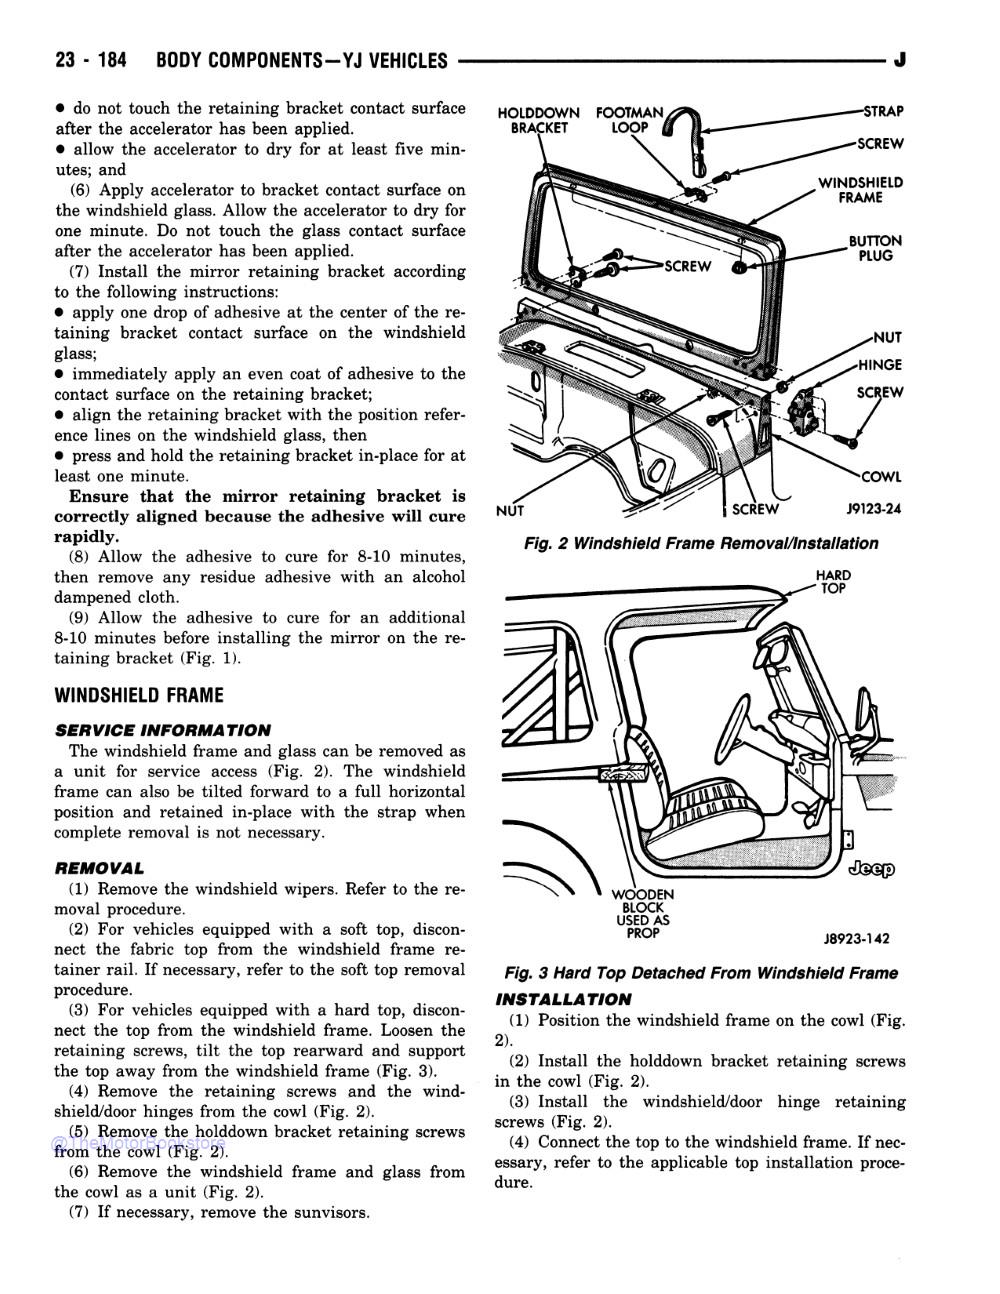 1994 Jeep Cherokee & Wrangler Shop Manual - Sample Page 4